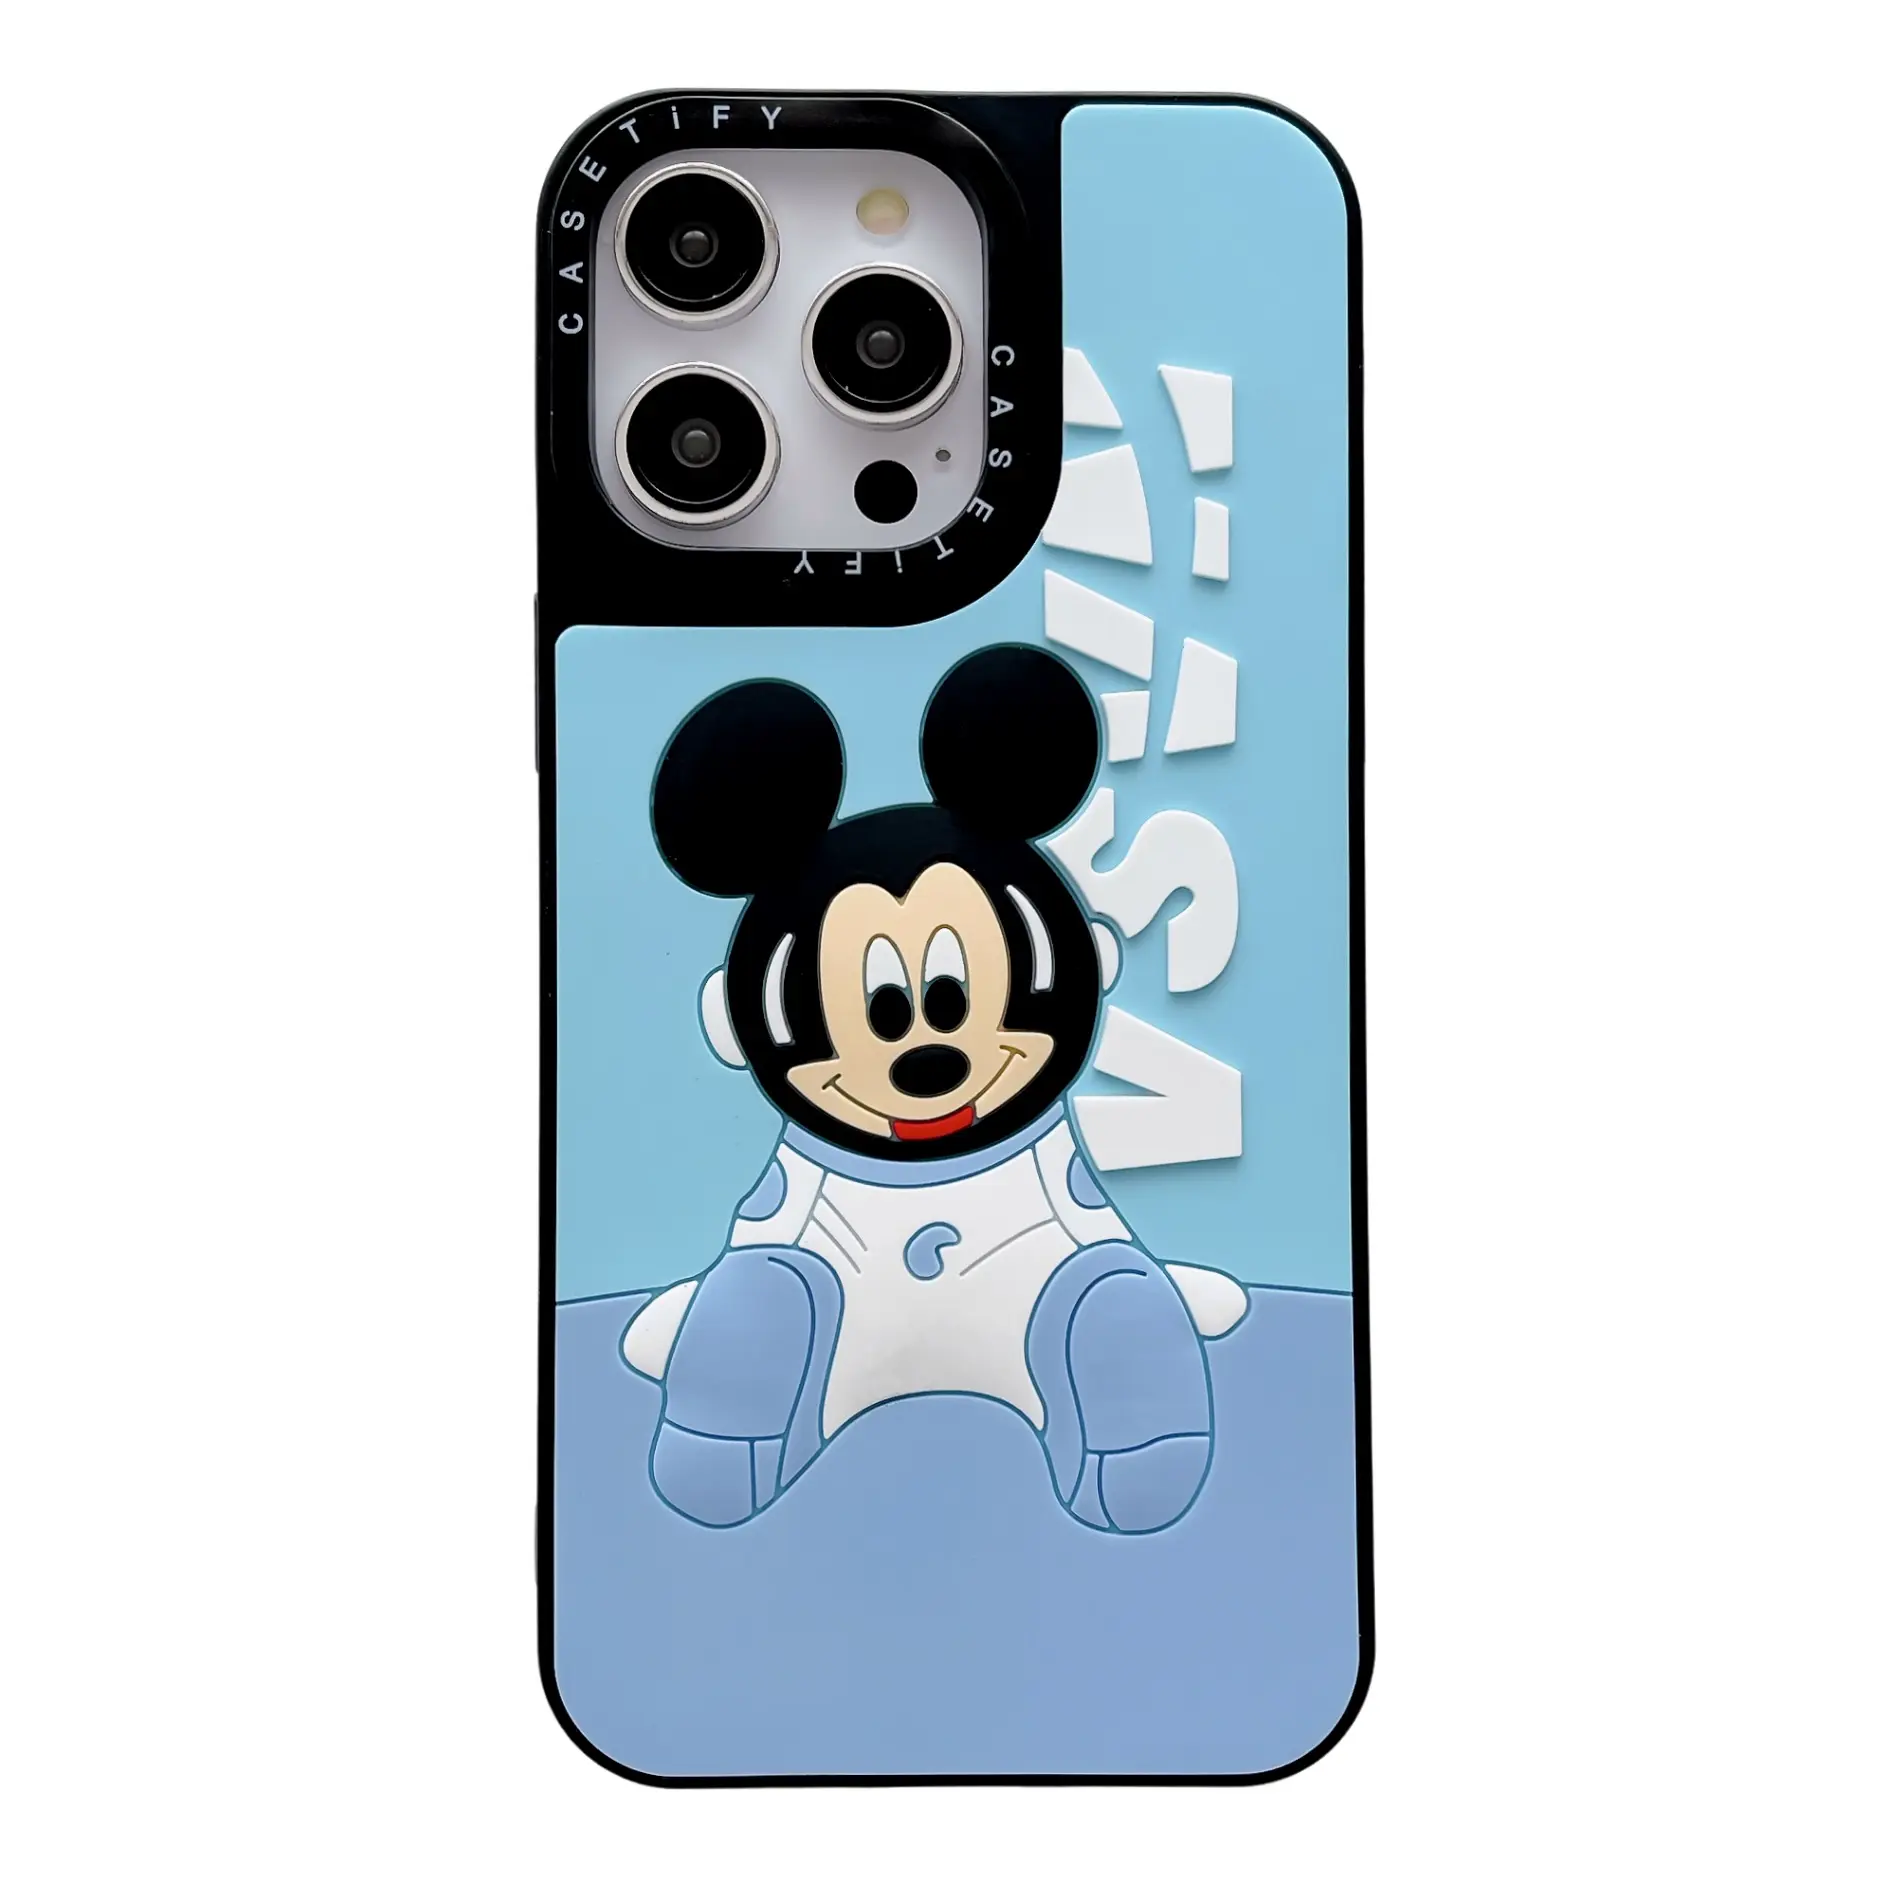 Funda de teléfono de TPU suave protectora de moda Mickey Mouse Minnie para iPhone Pro Max funda negra